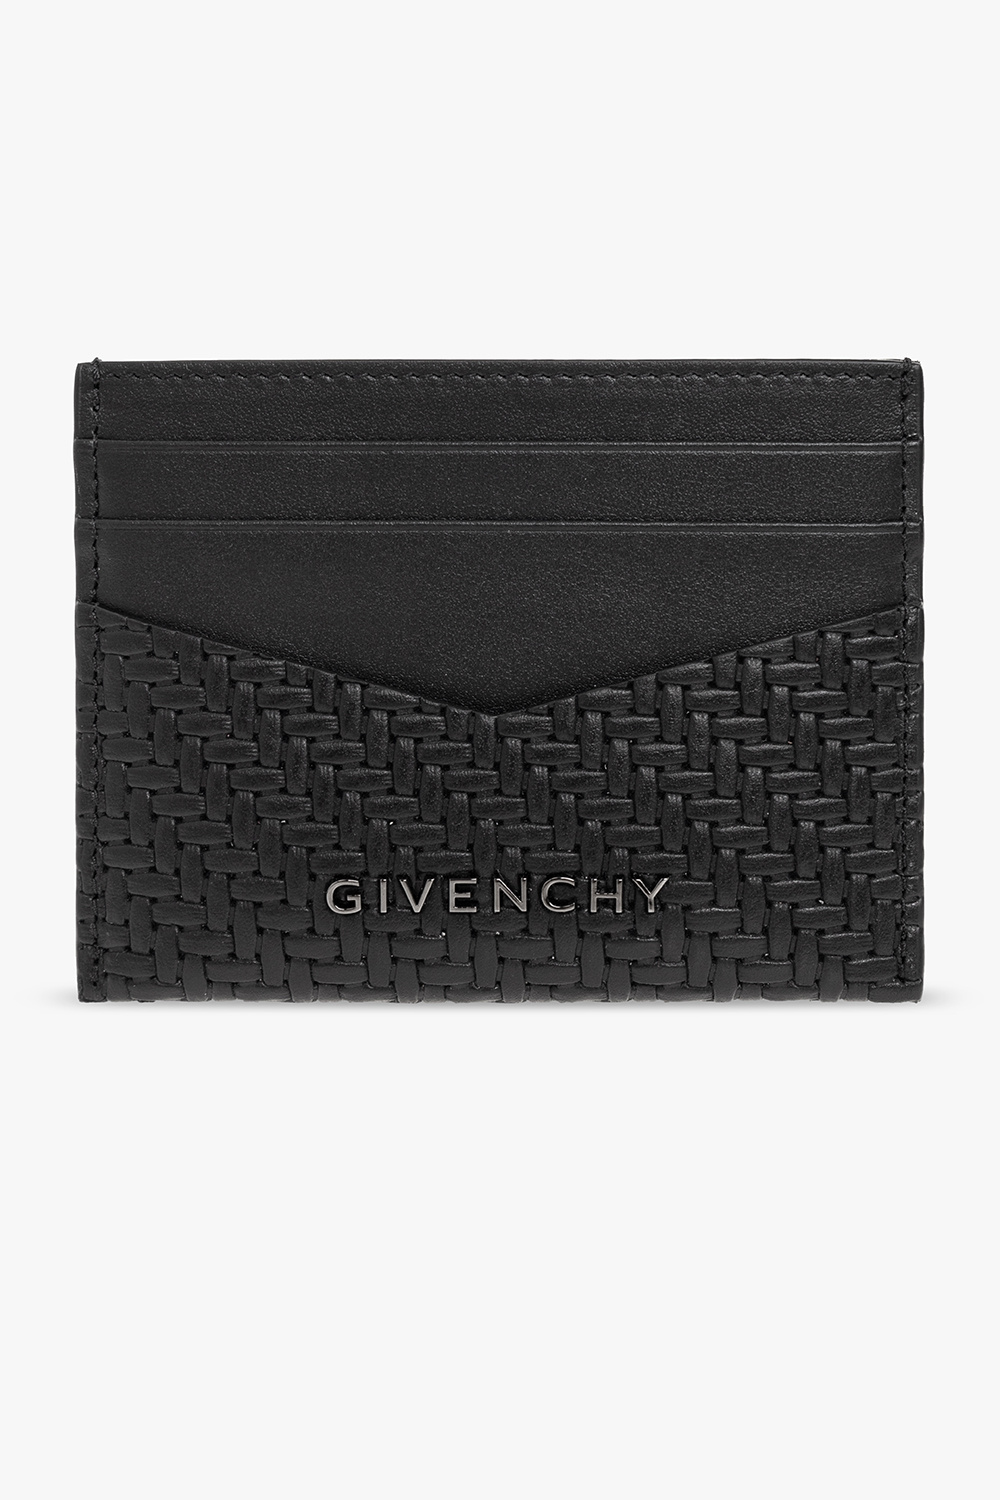 Givenchy Card holder